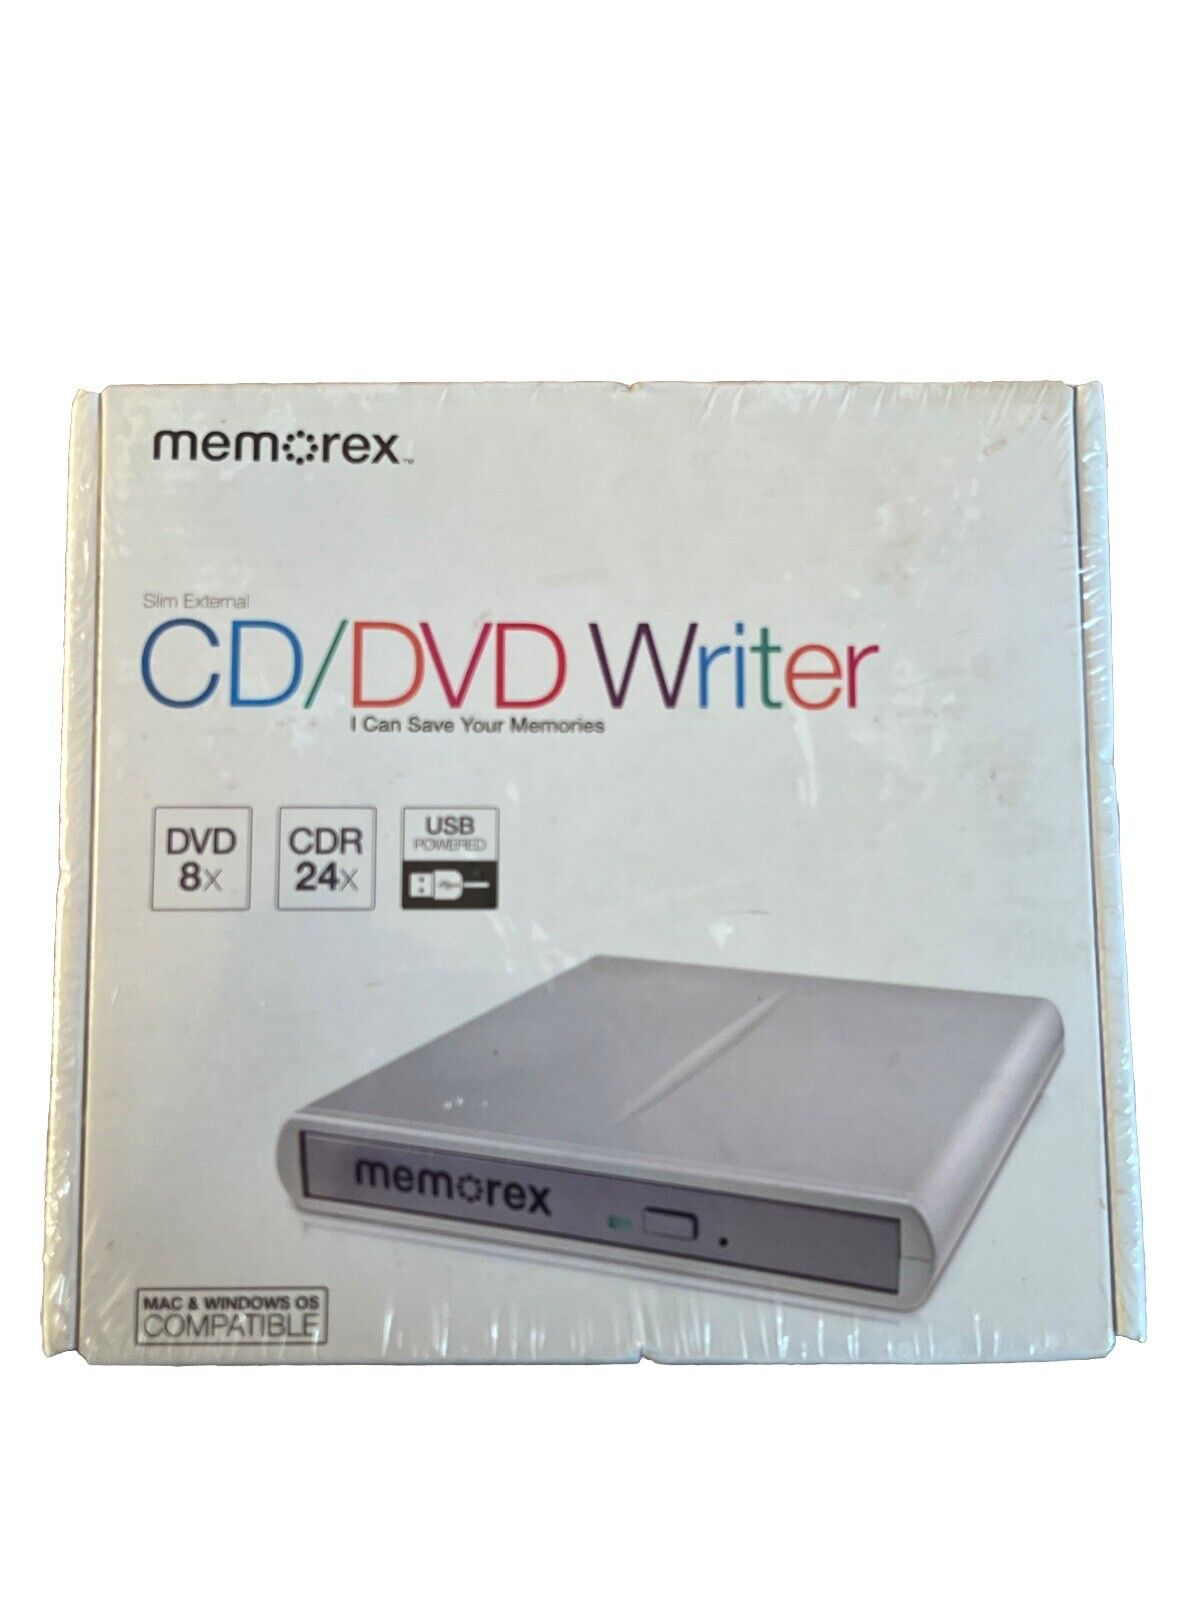 SEALED NEW Memorex Slim External CD/DVD Writer, DVD 8X, CDR 24X, USB Powered